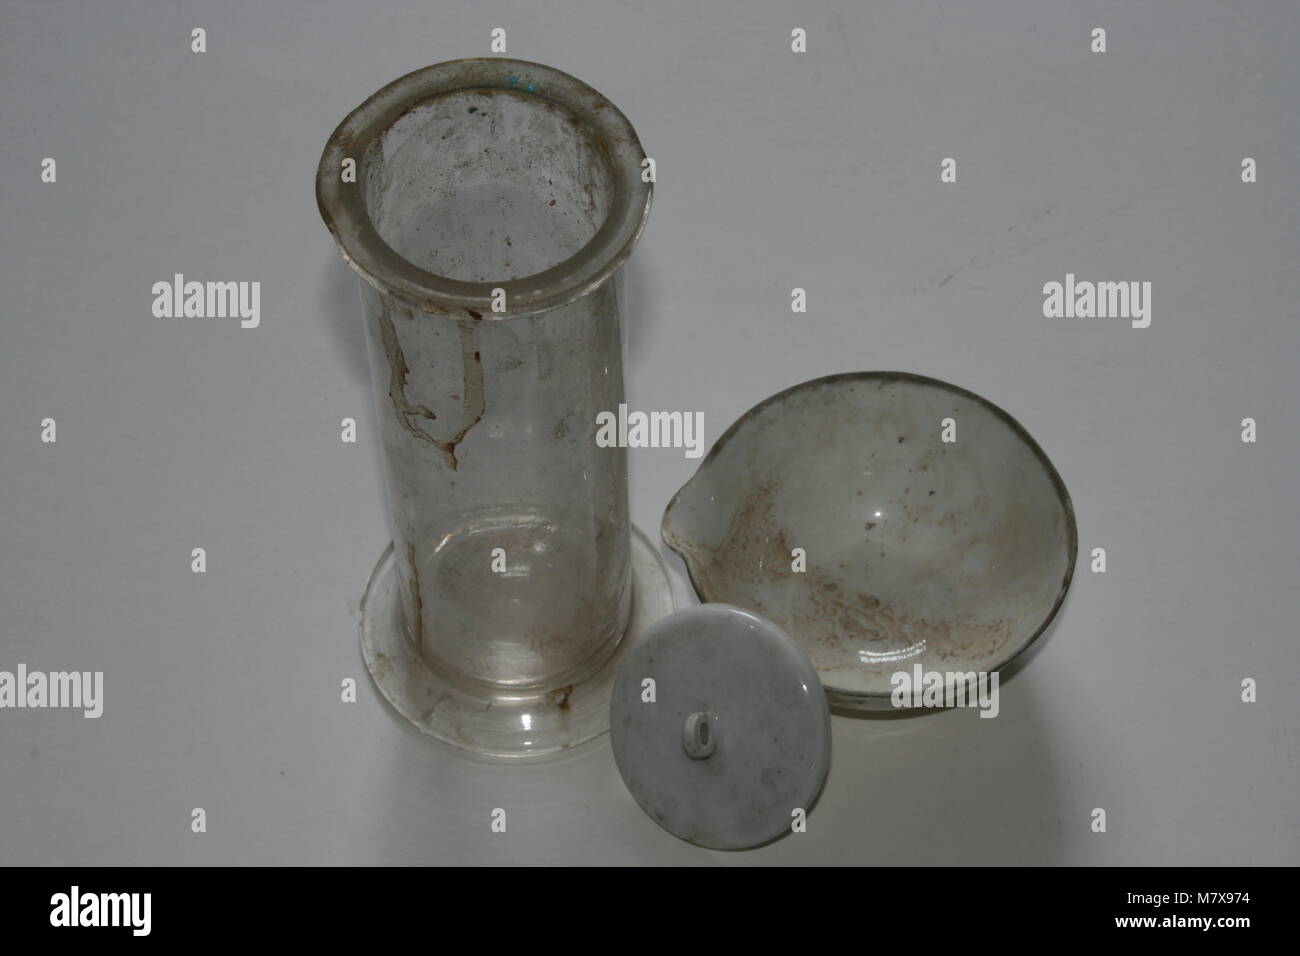 https://c8.alamy.com/comp/M7X974/gas-jar-evaporating-dish-and-lid-M7X974.jpg